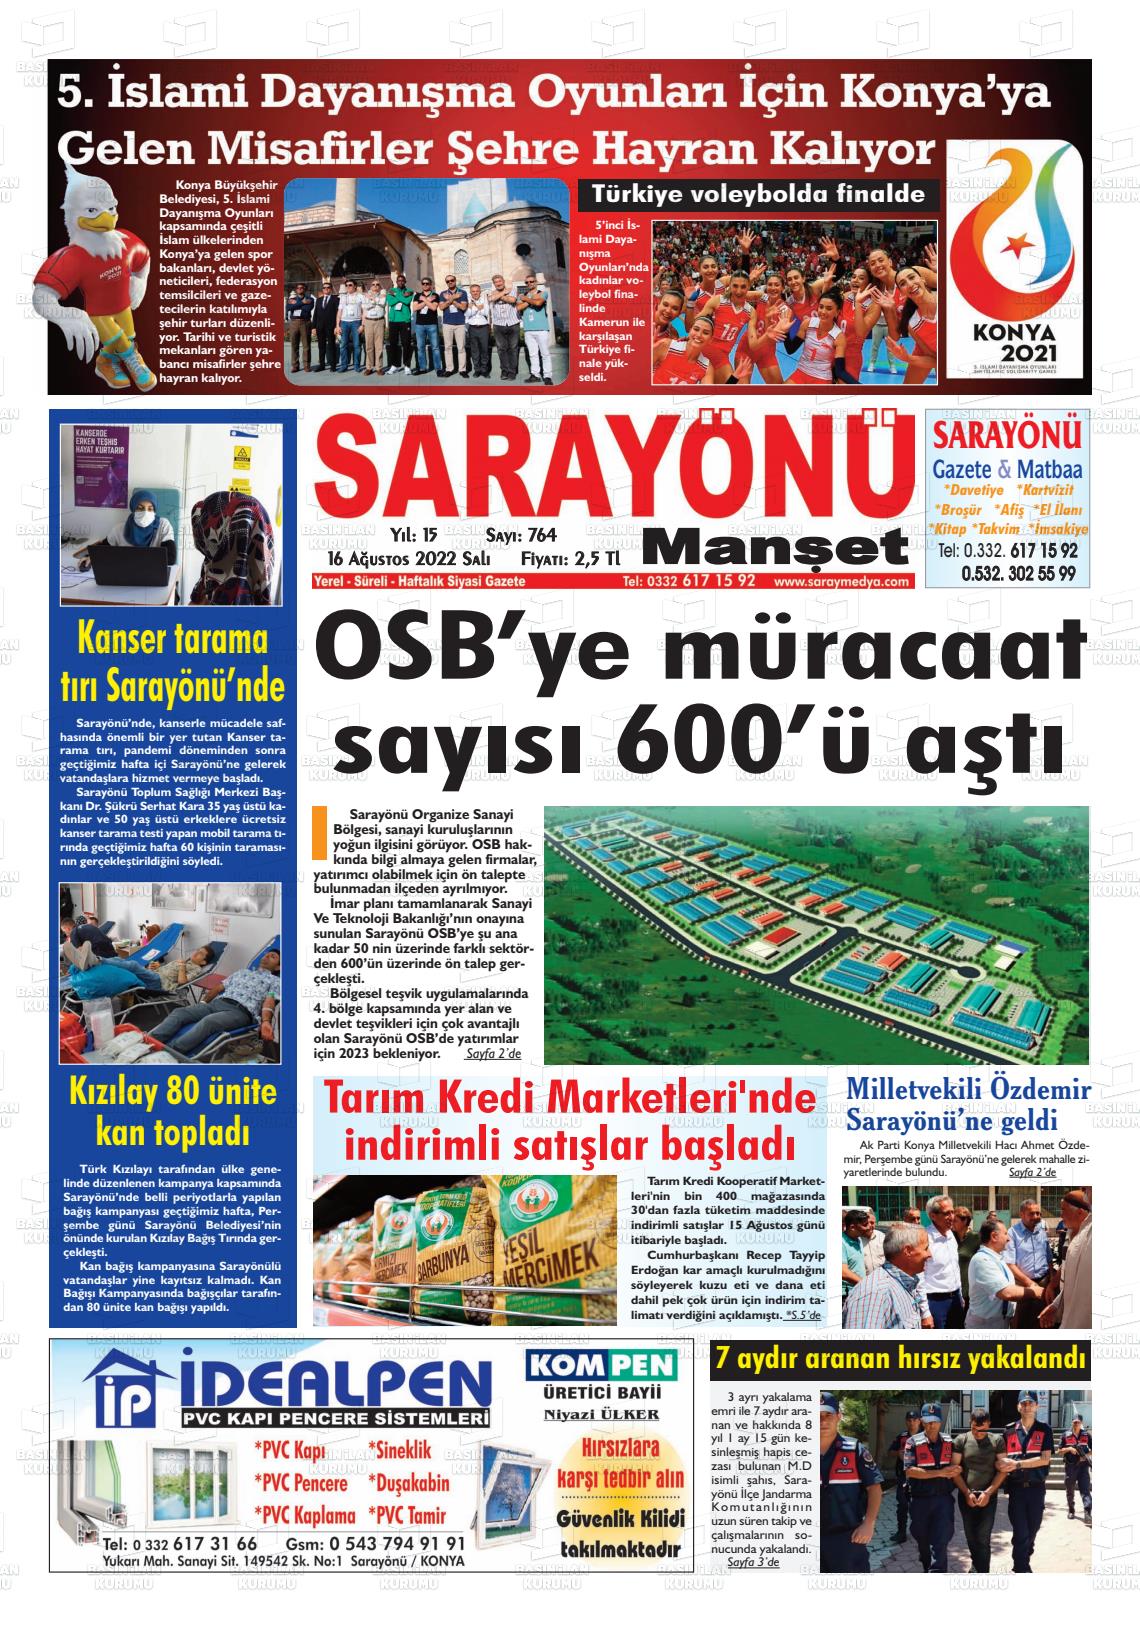 16 Ağustos 2022 Saray Medya Gazete Manşeti